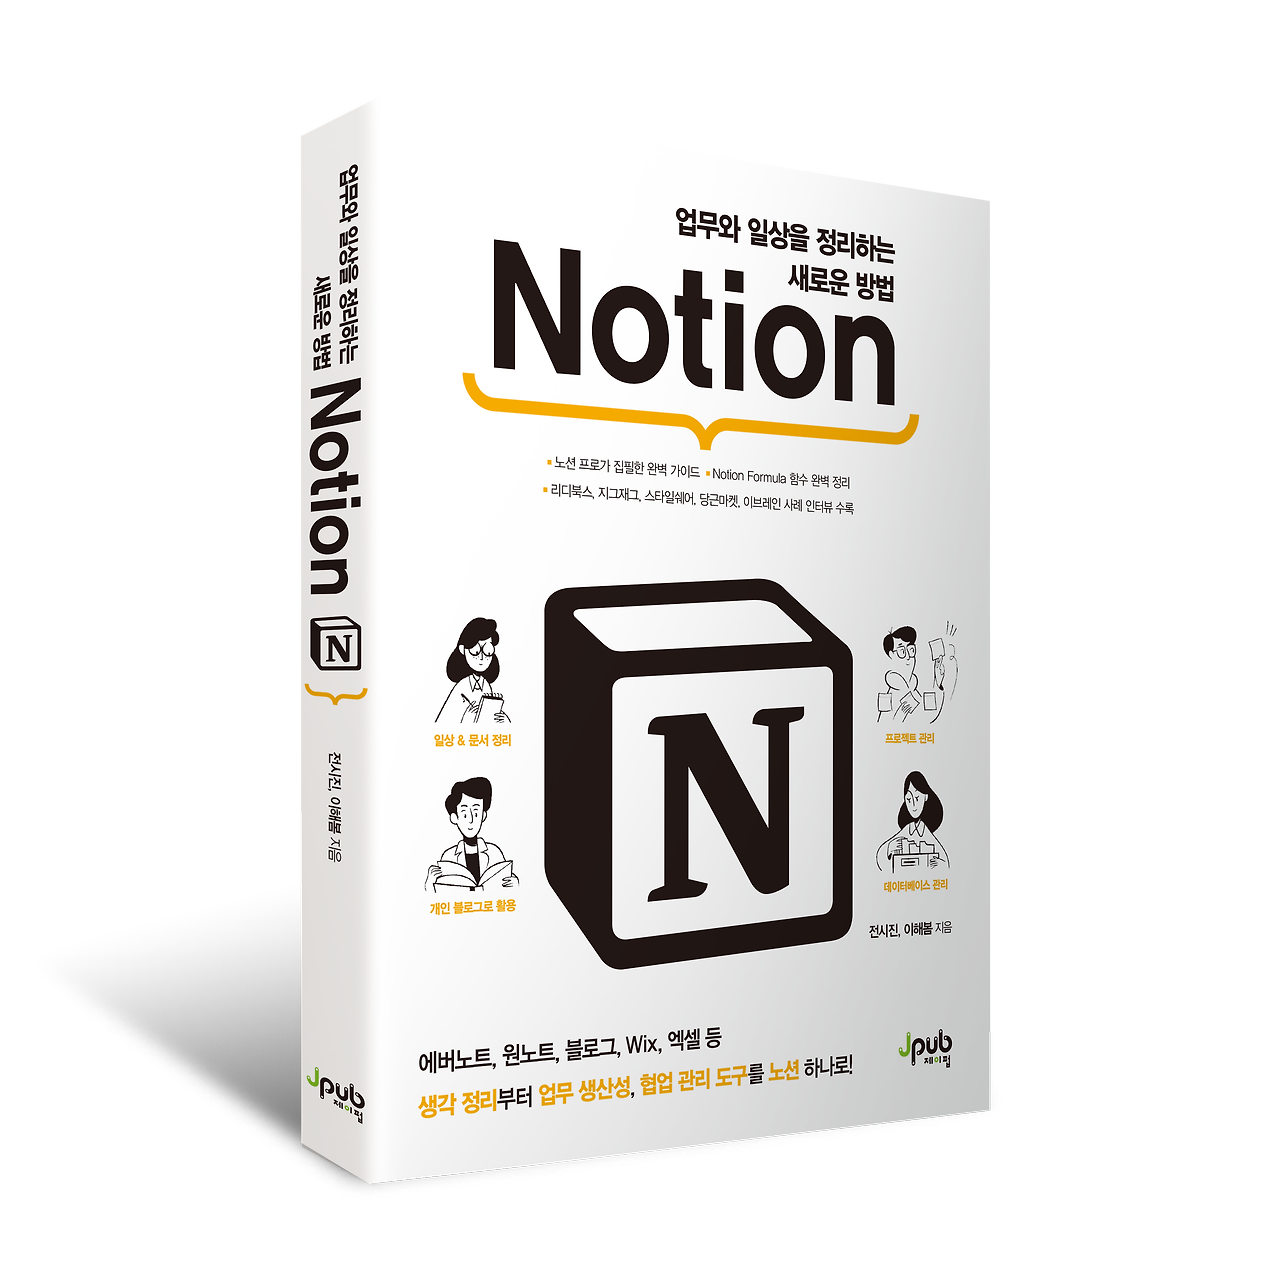 Ноушен вход. Notion. Notion (приложение). Ежедневник notion. Логотип notion.